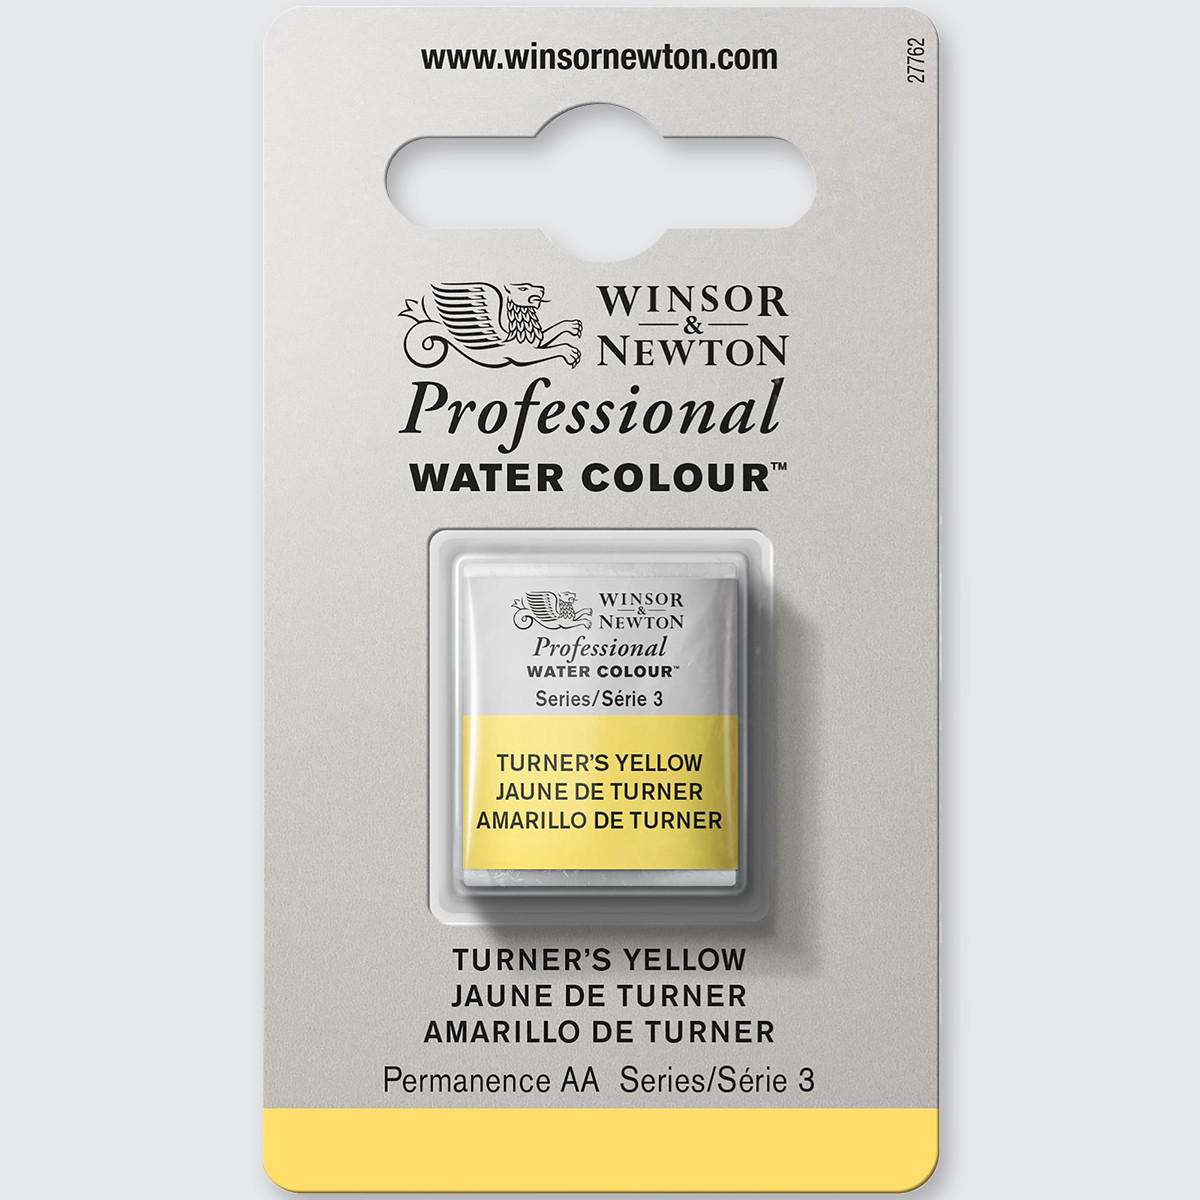 Winsor & Newton Professional Water Colour Half Pan Turner’s Yellow